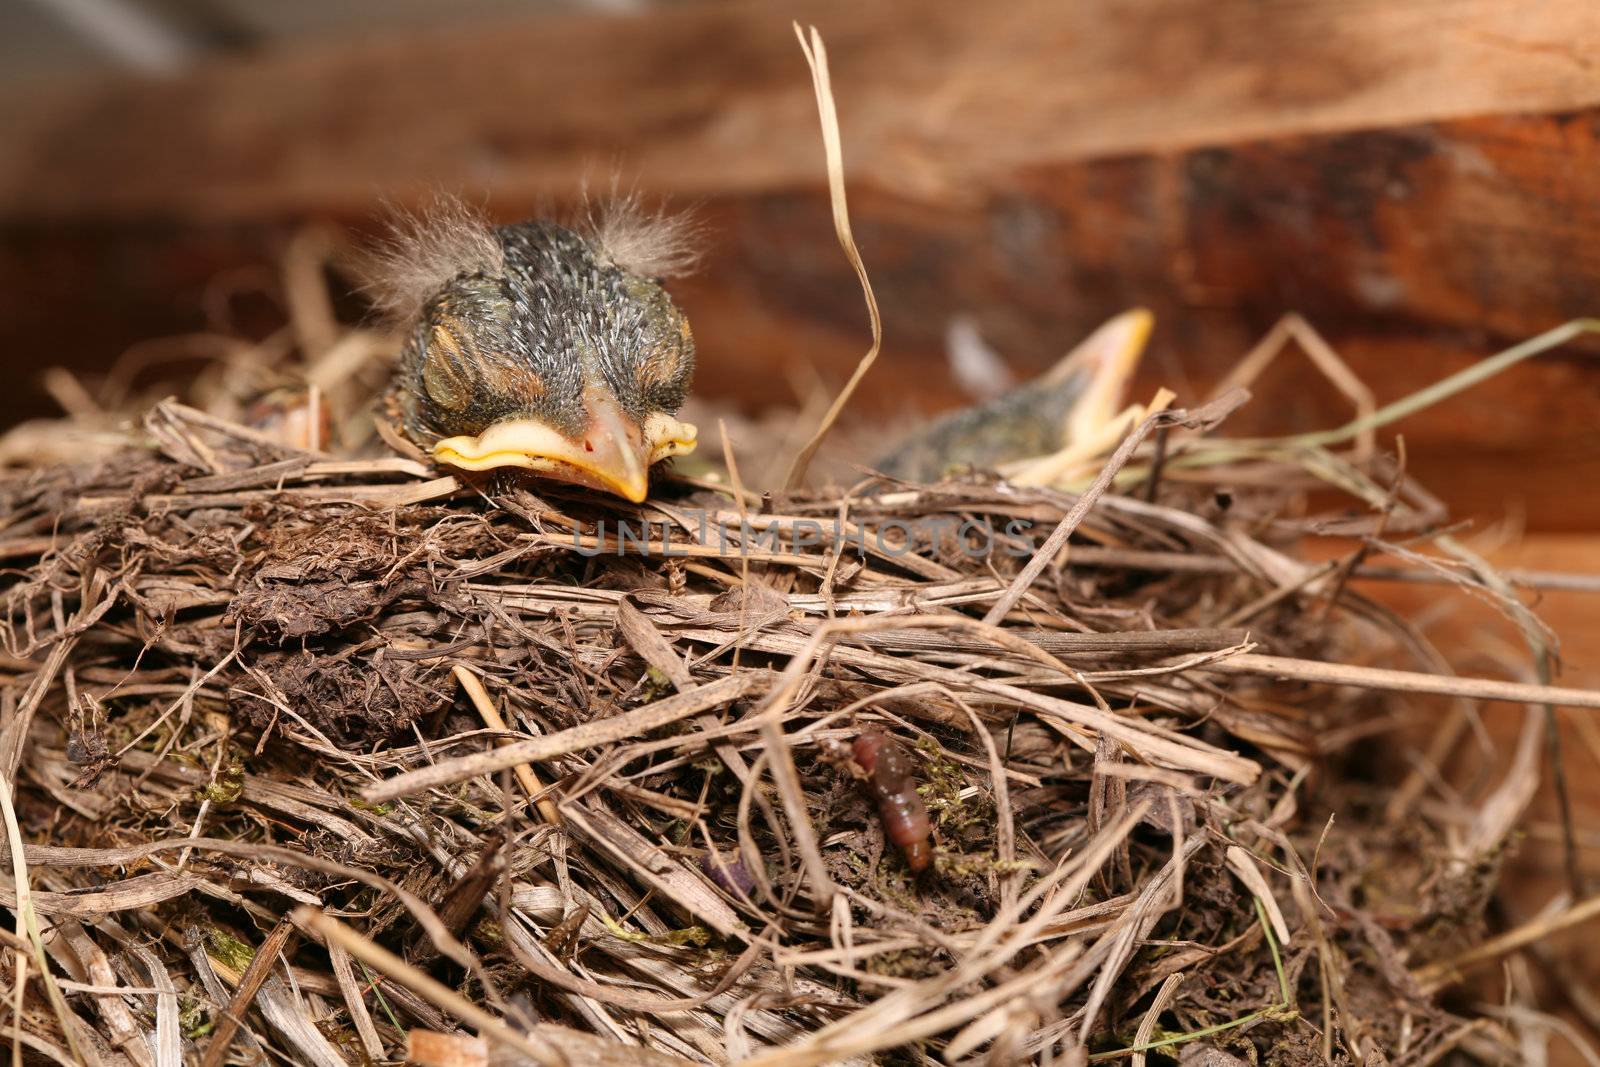 Baby bird resting in nest, hanging beak over edge